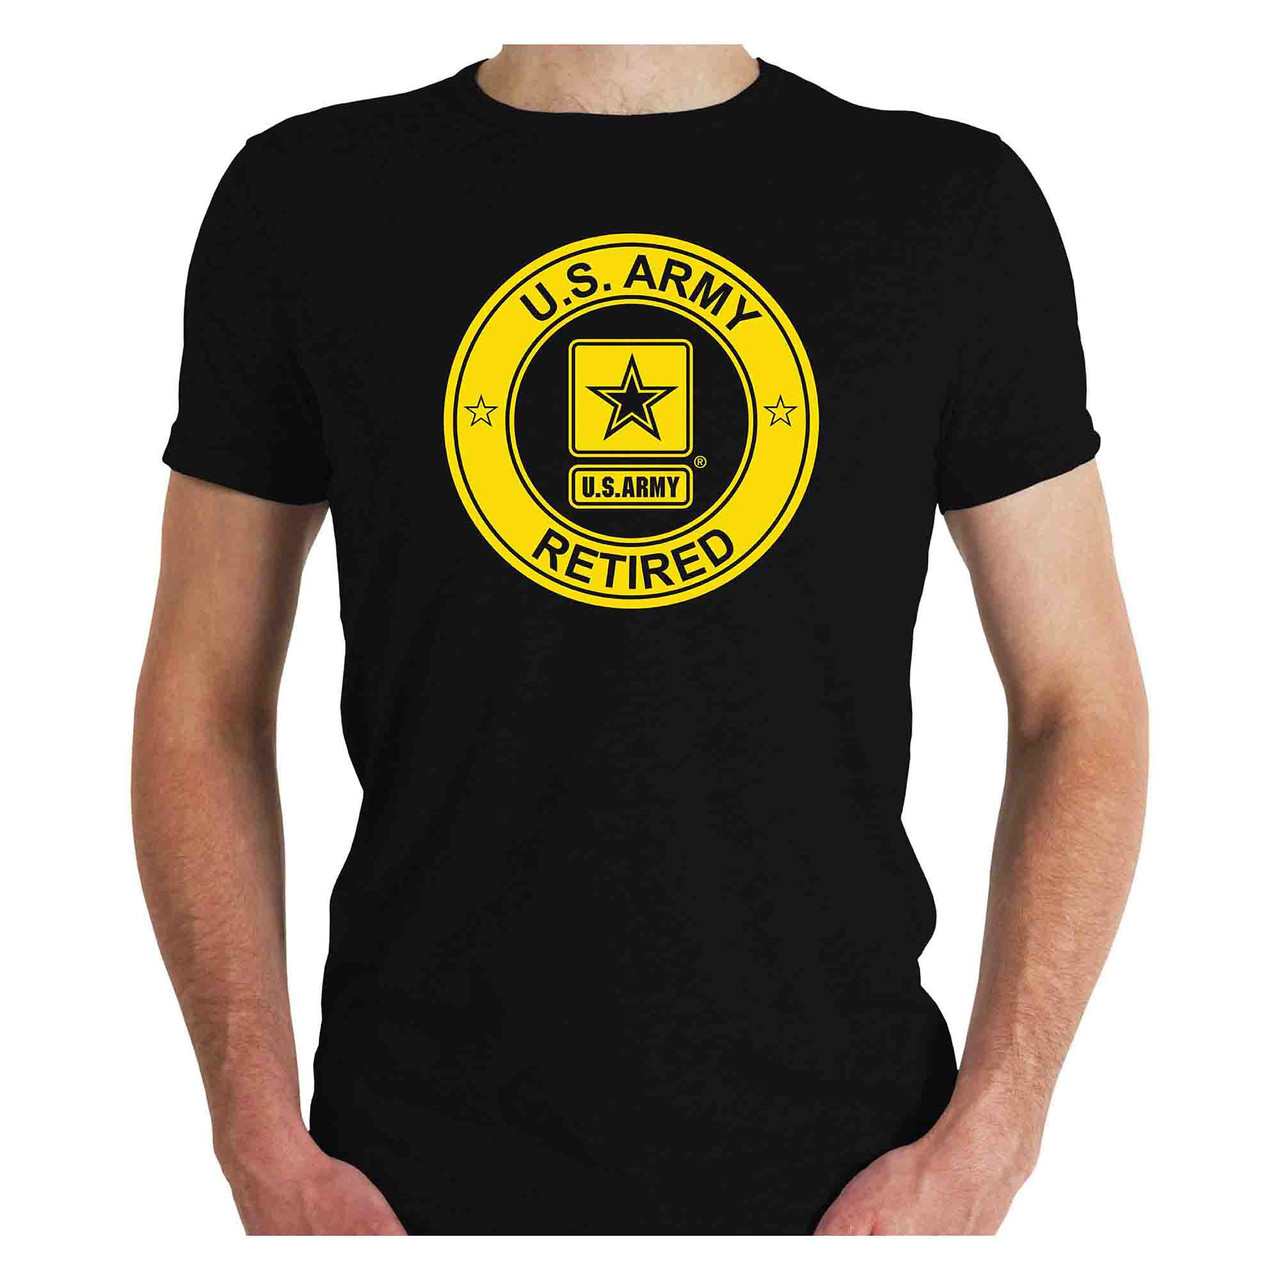 us army retired tshirt army logo black - front view